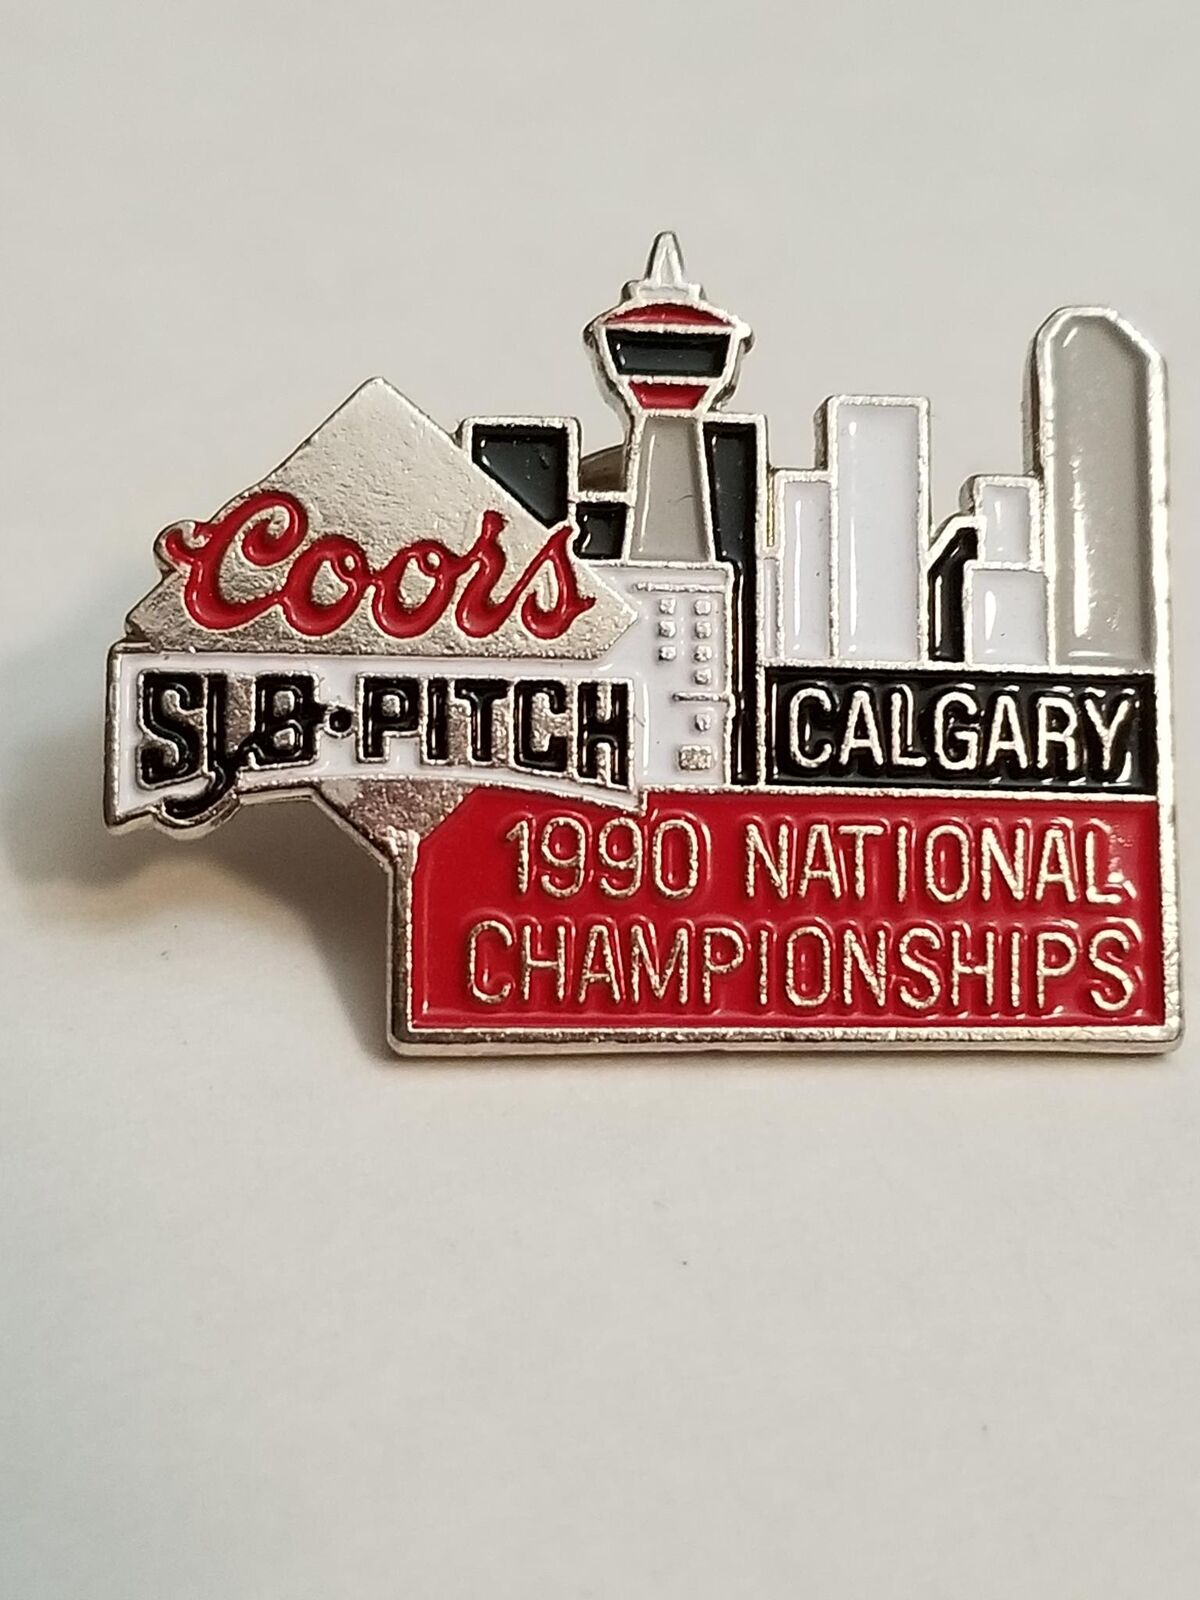 Coors Slow Pitch Calgary 1990 National Championships Softball Lapel Pin 4541